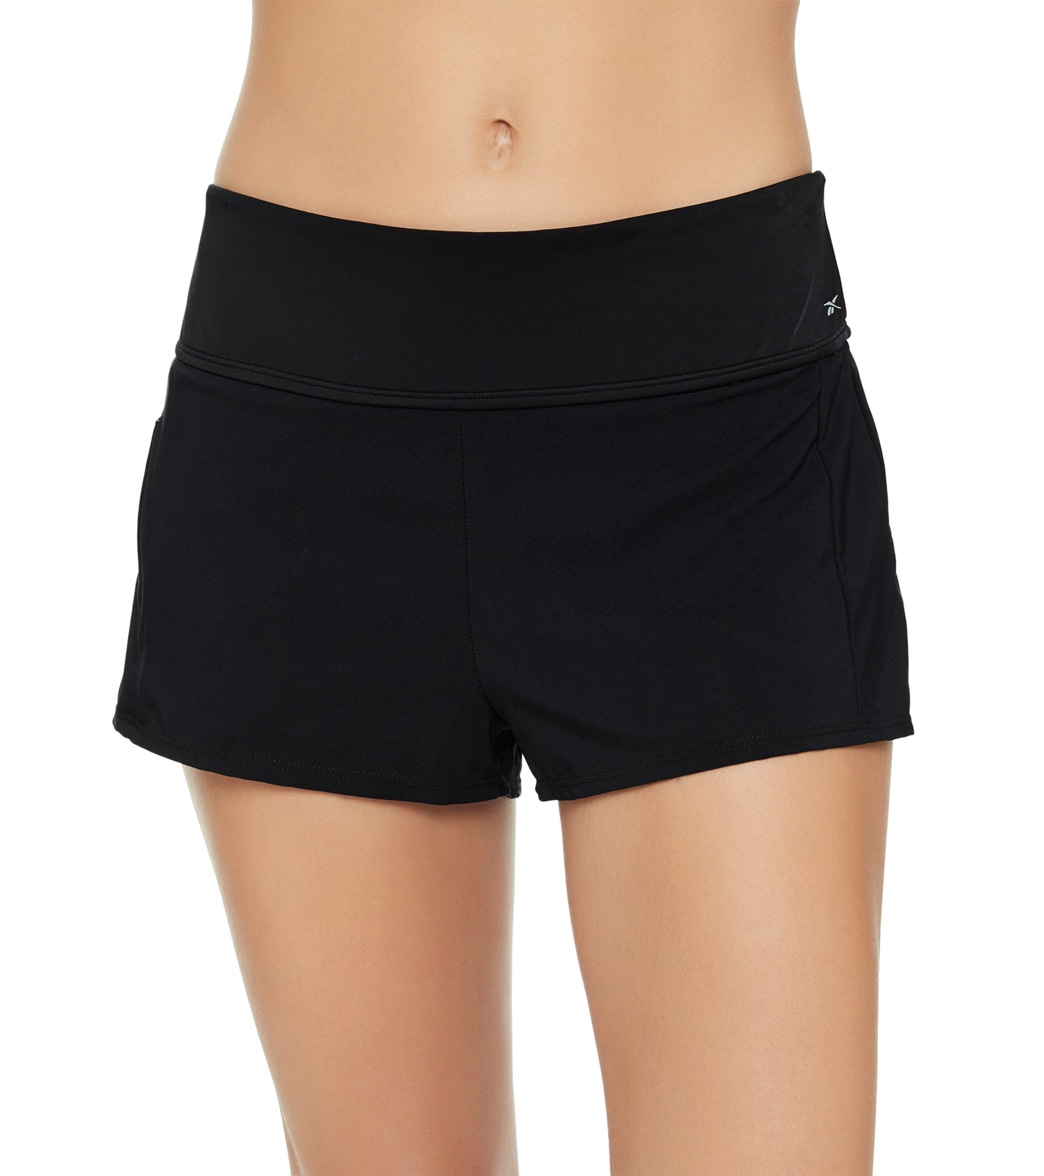 Reebok Women's Solid Cover Up Short - Black Large - Swimoutlet.com